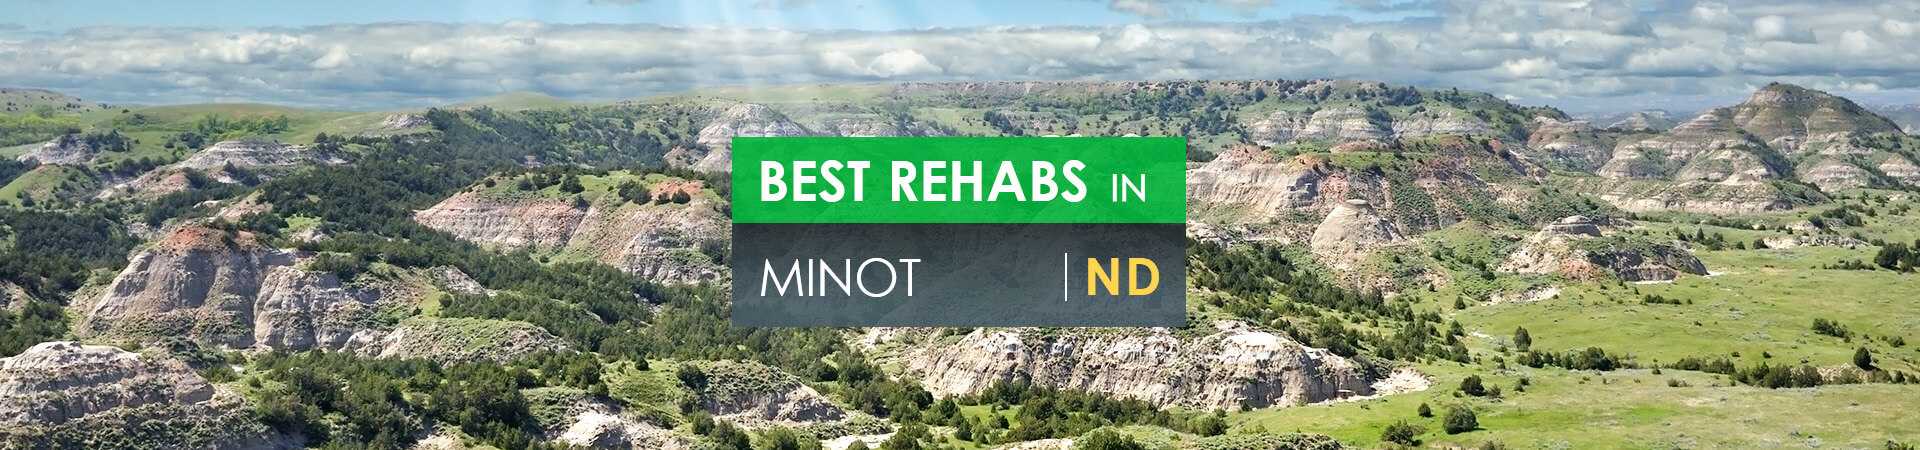 Best rehabs in Minot, ND